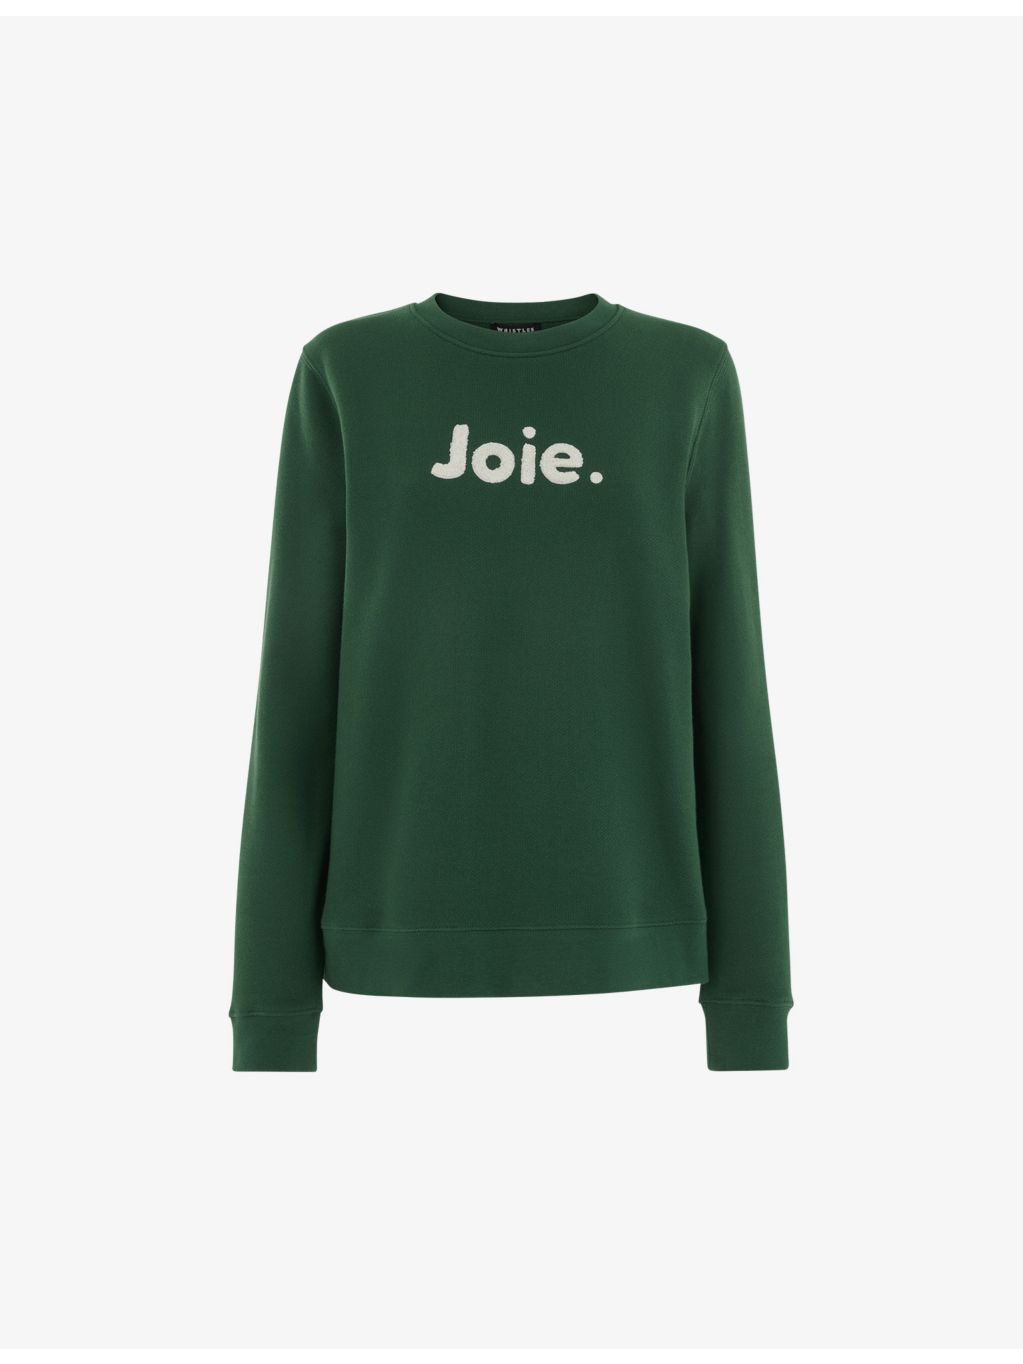 WHISTLES - Joie slogan-appliqué cotton-jersey sweatshirt